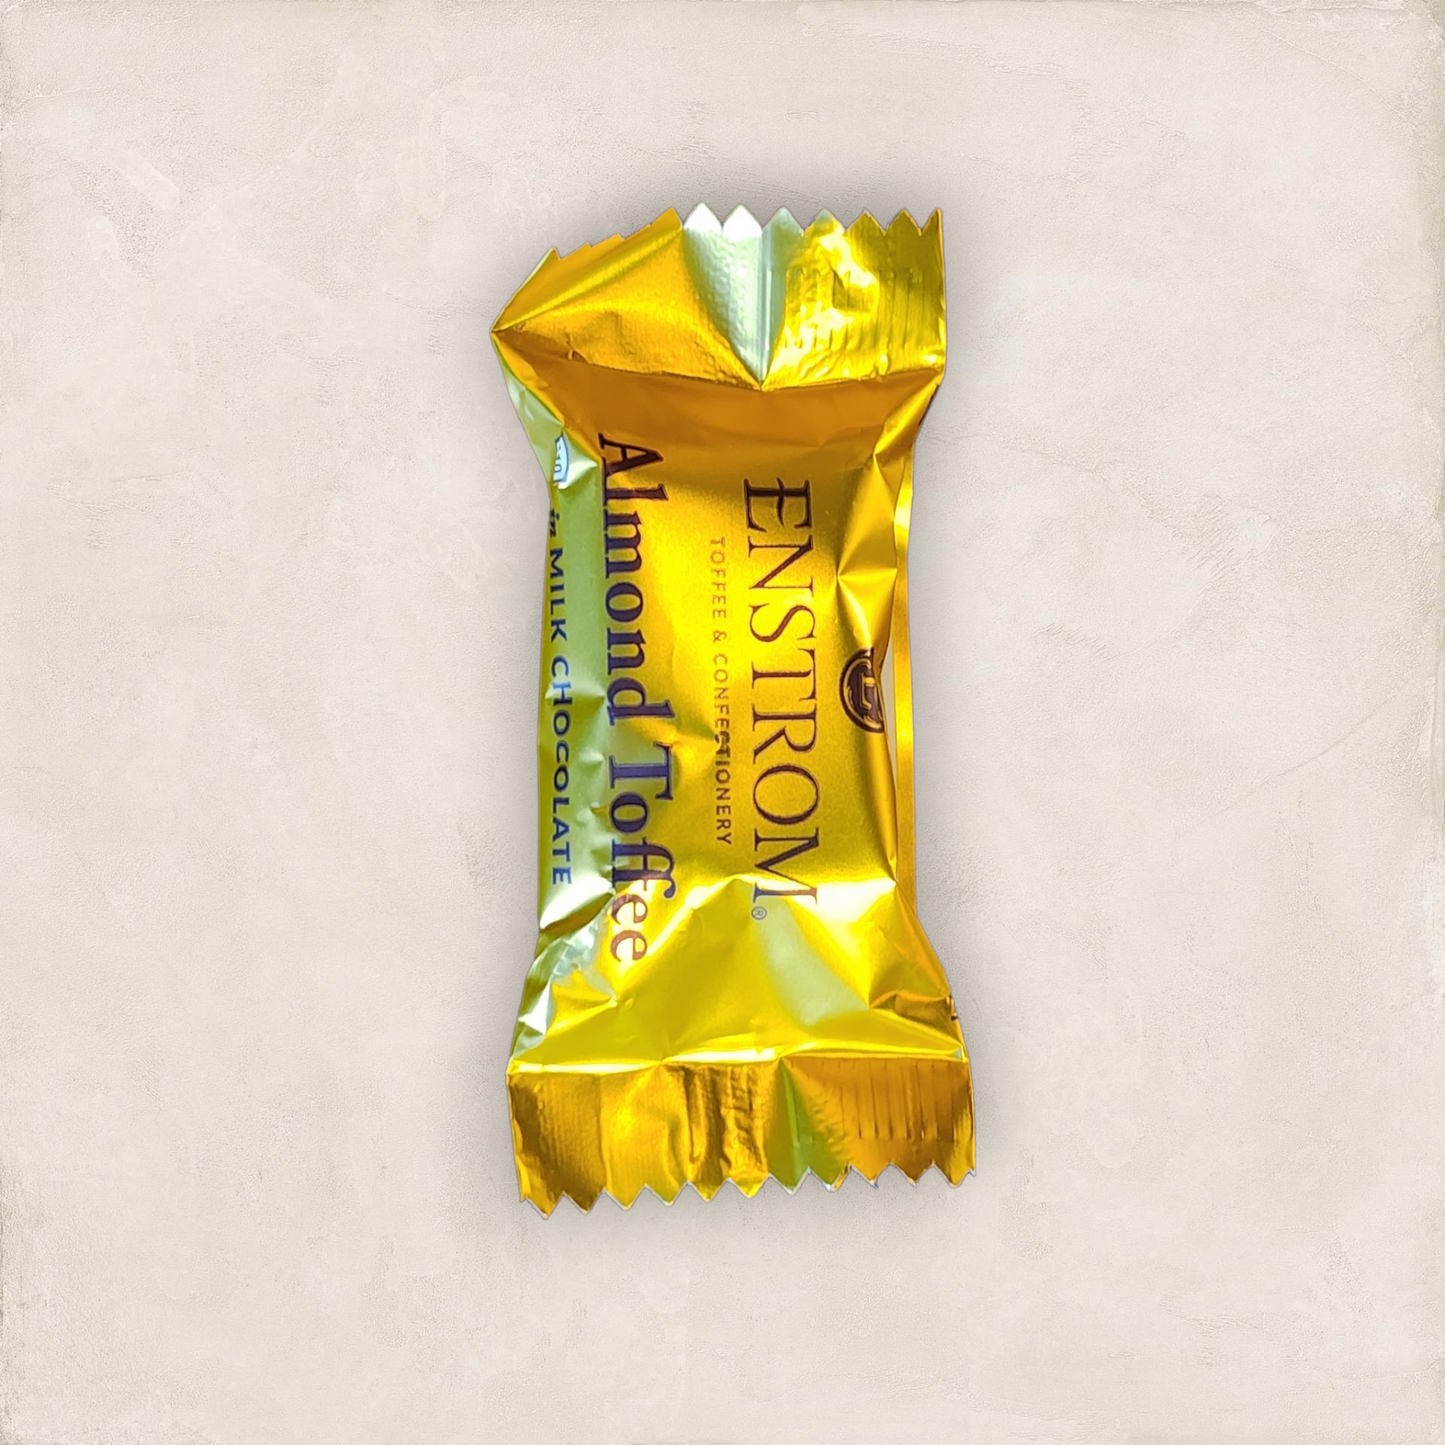 Enstrom Chocolate | Single